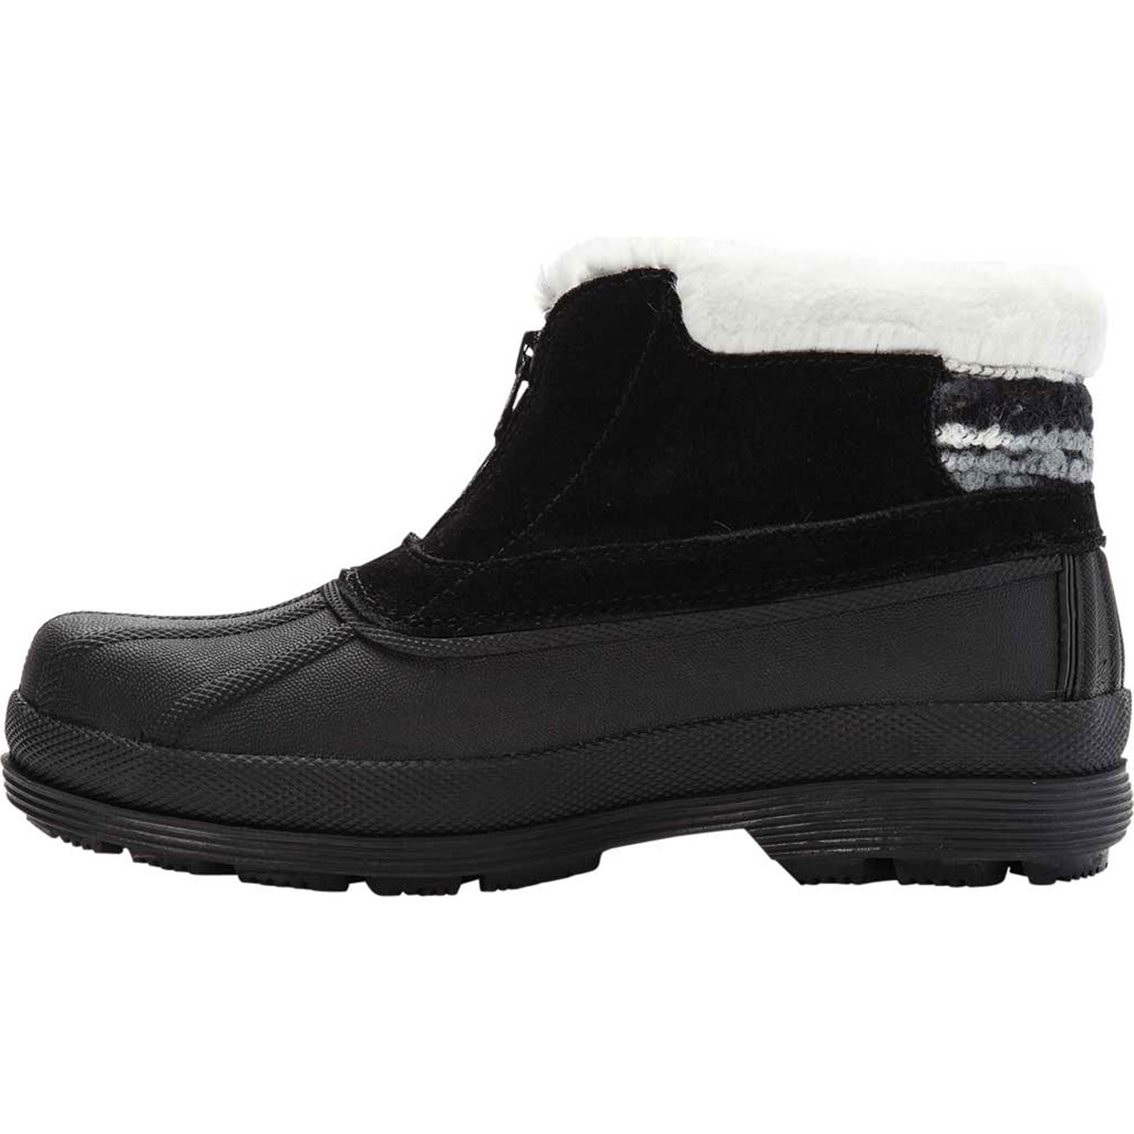 Propet Women's Lumi Ankle Zip Boots | Outdoor | Shoes | Shop The Exchange